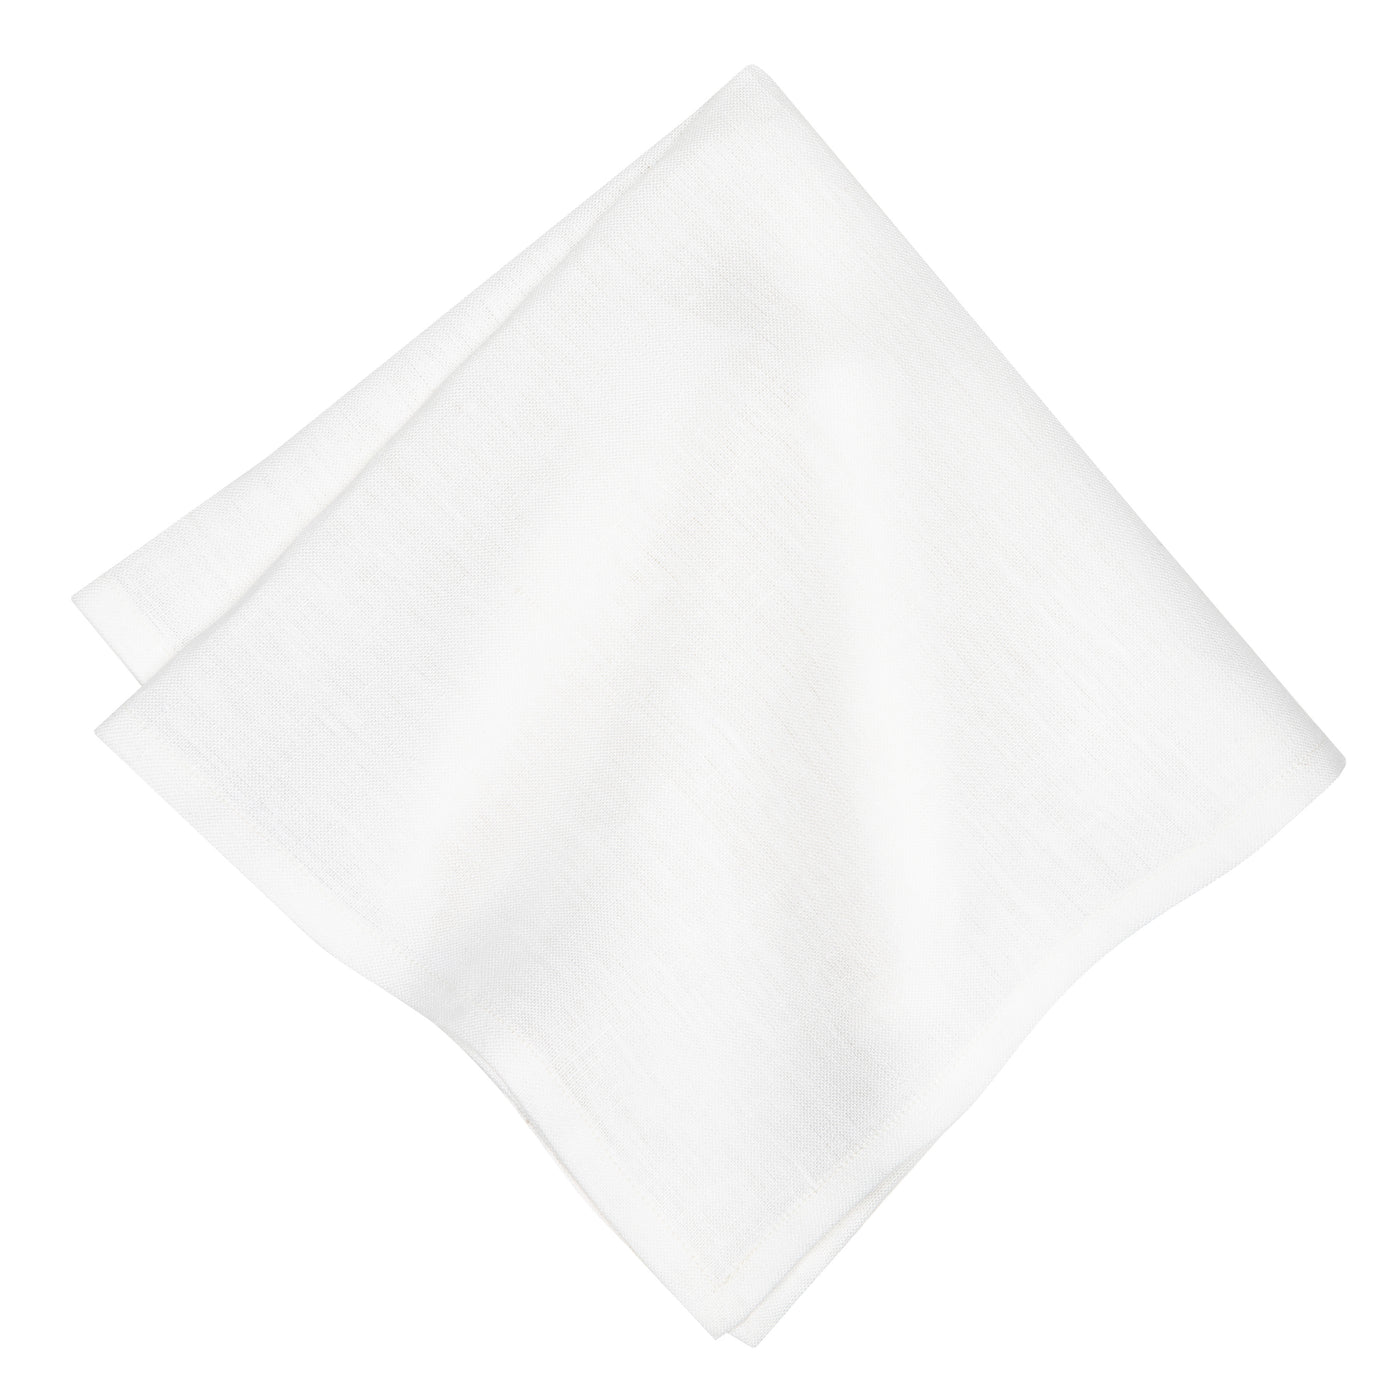 Palma Handwoven Linen White Napkins 20x20 - Set of 4